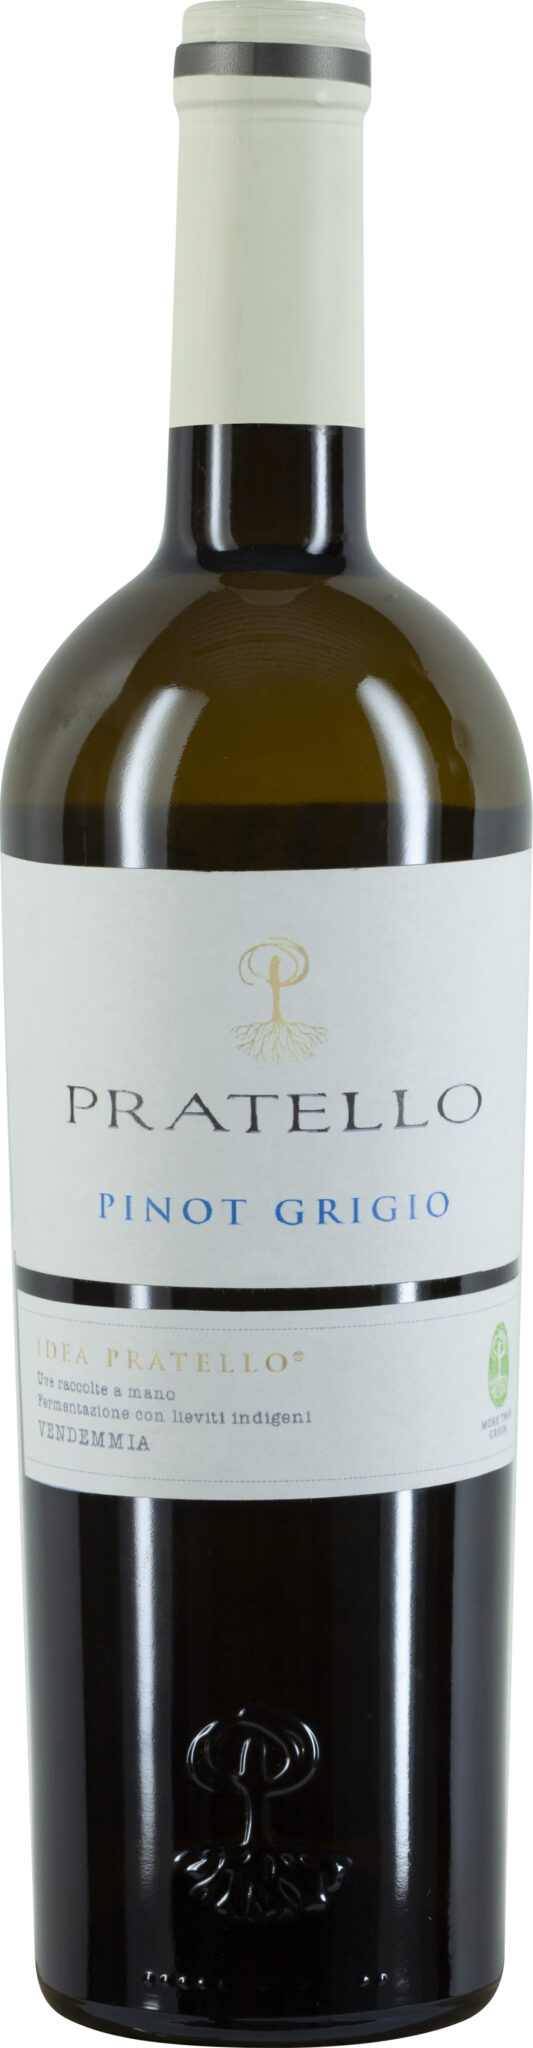 Pratello Pinot Grigio, Garda DOC